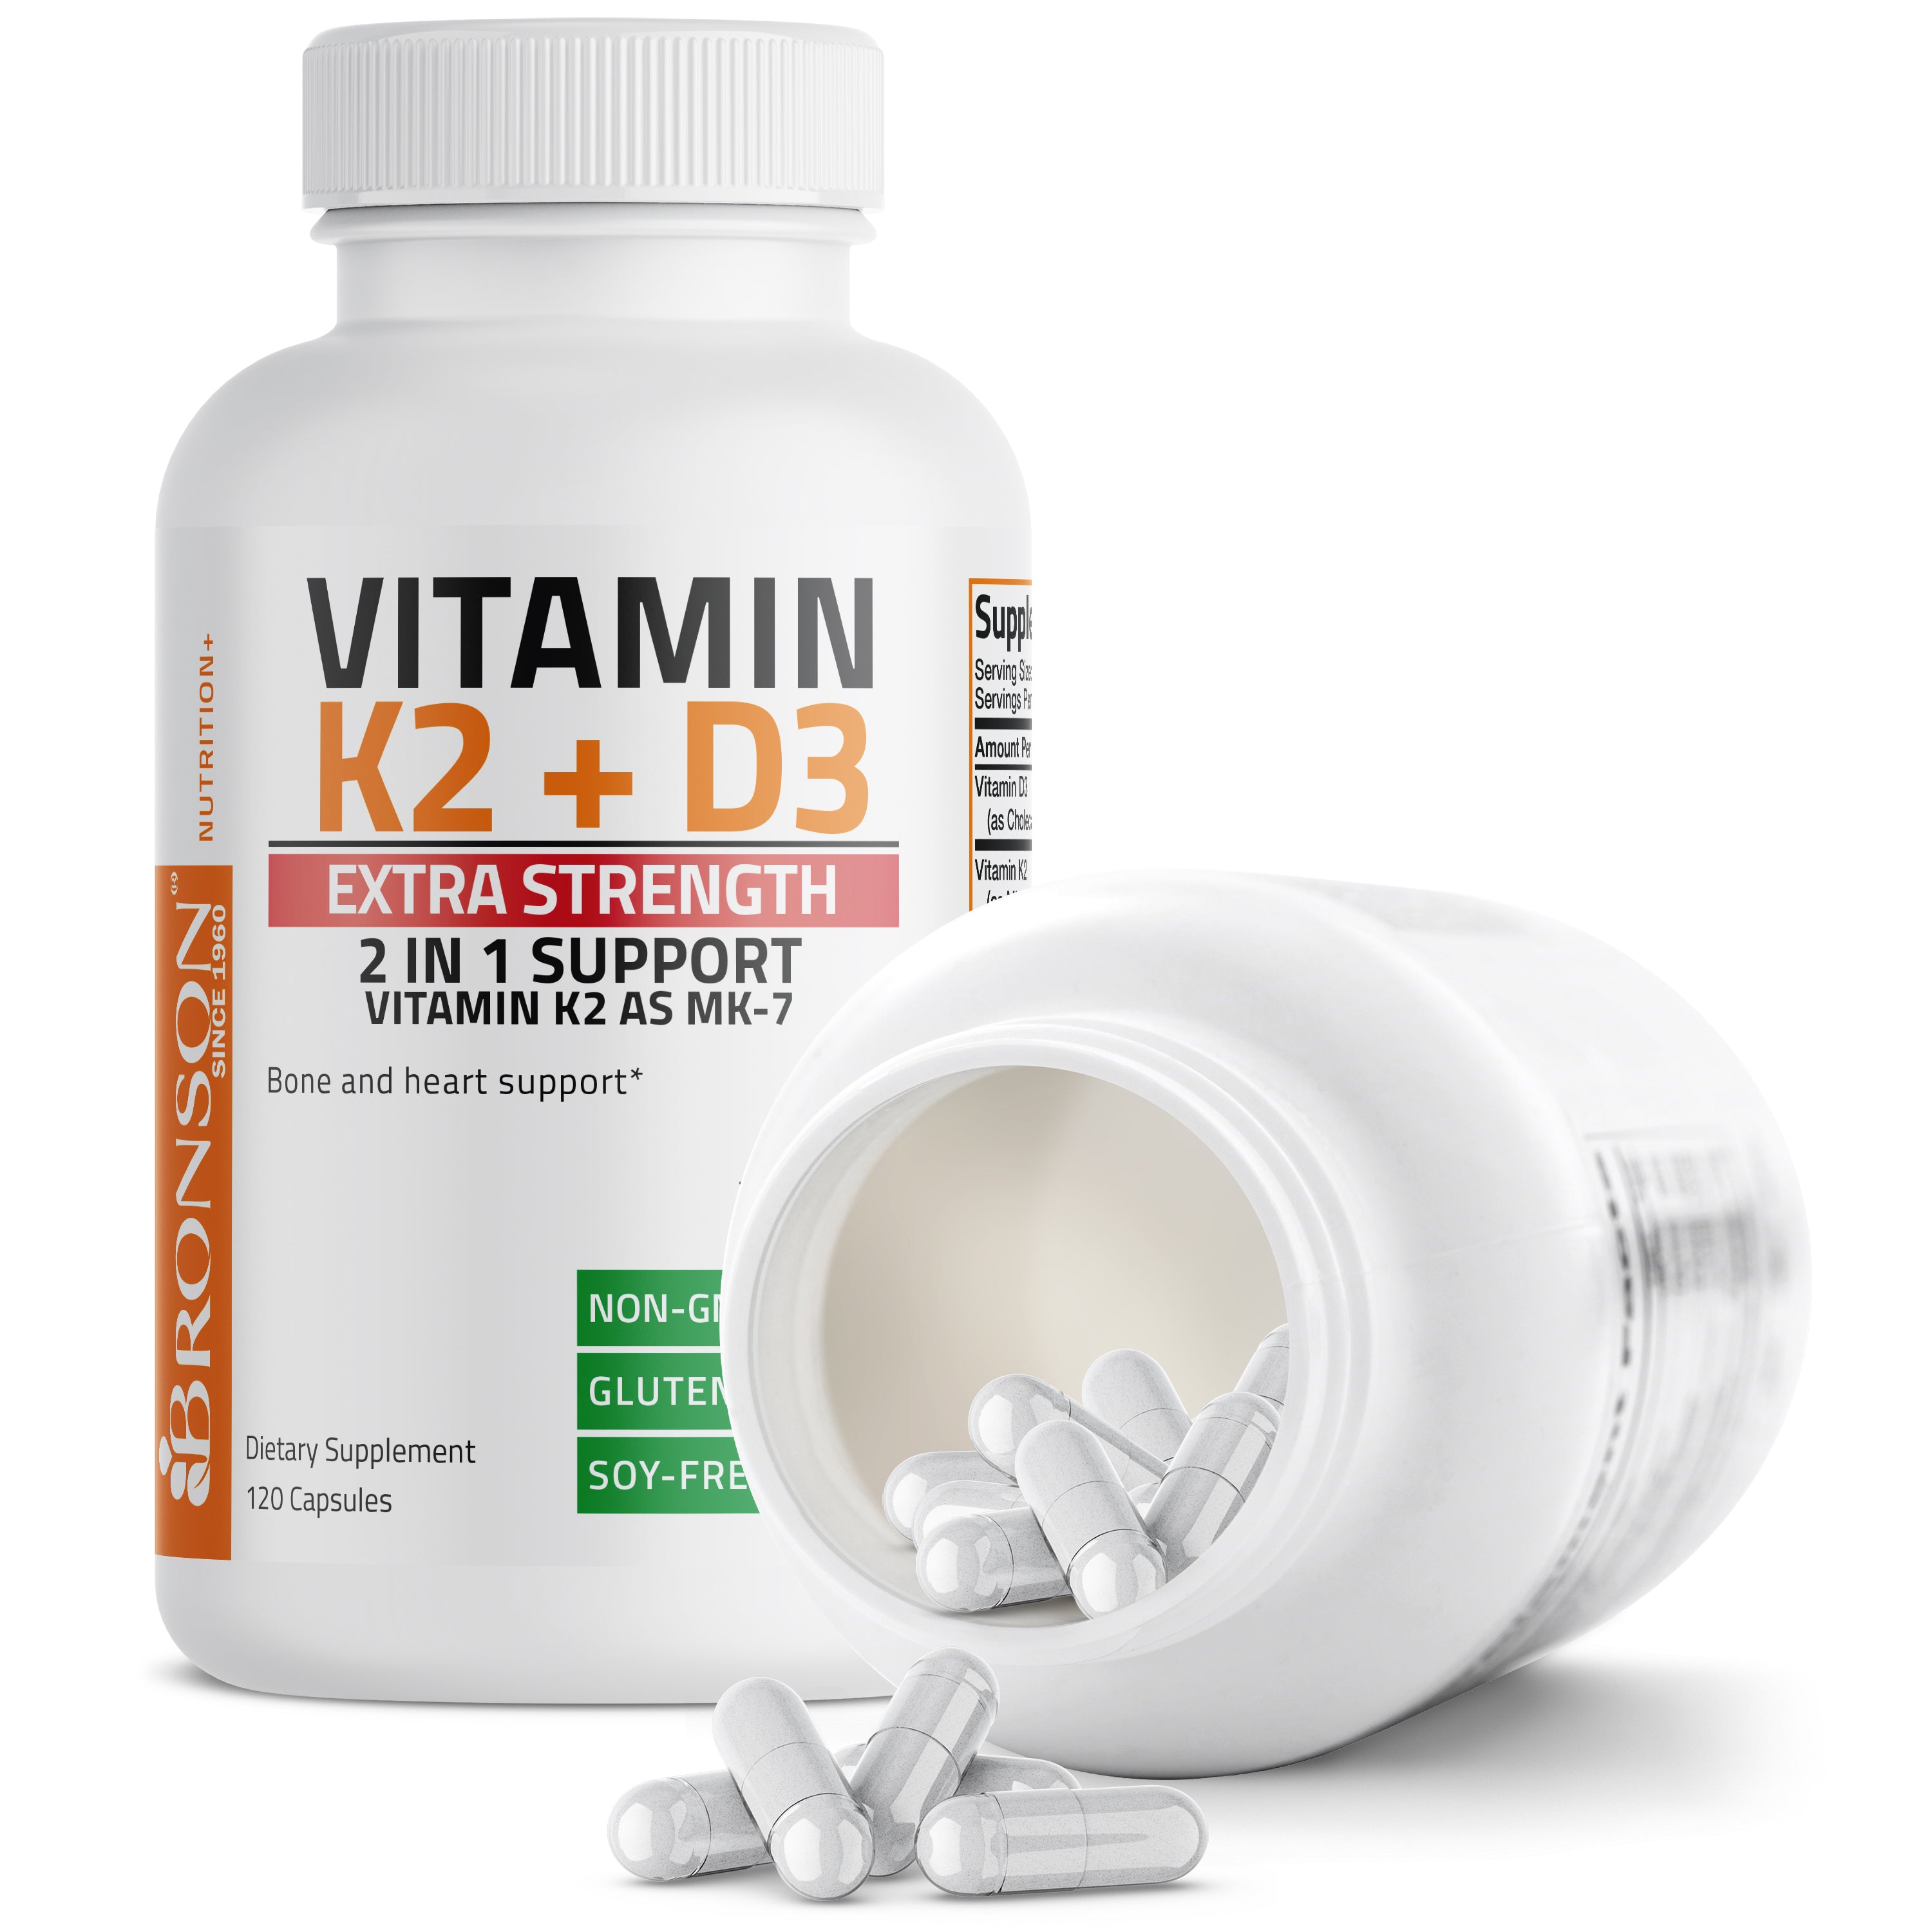 Vitamin K2 MK-7 Plus Vitamin D3 Extra Strength view 12 of 12